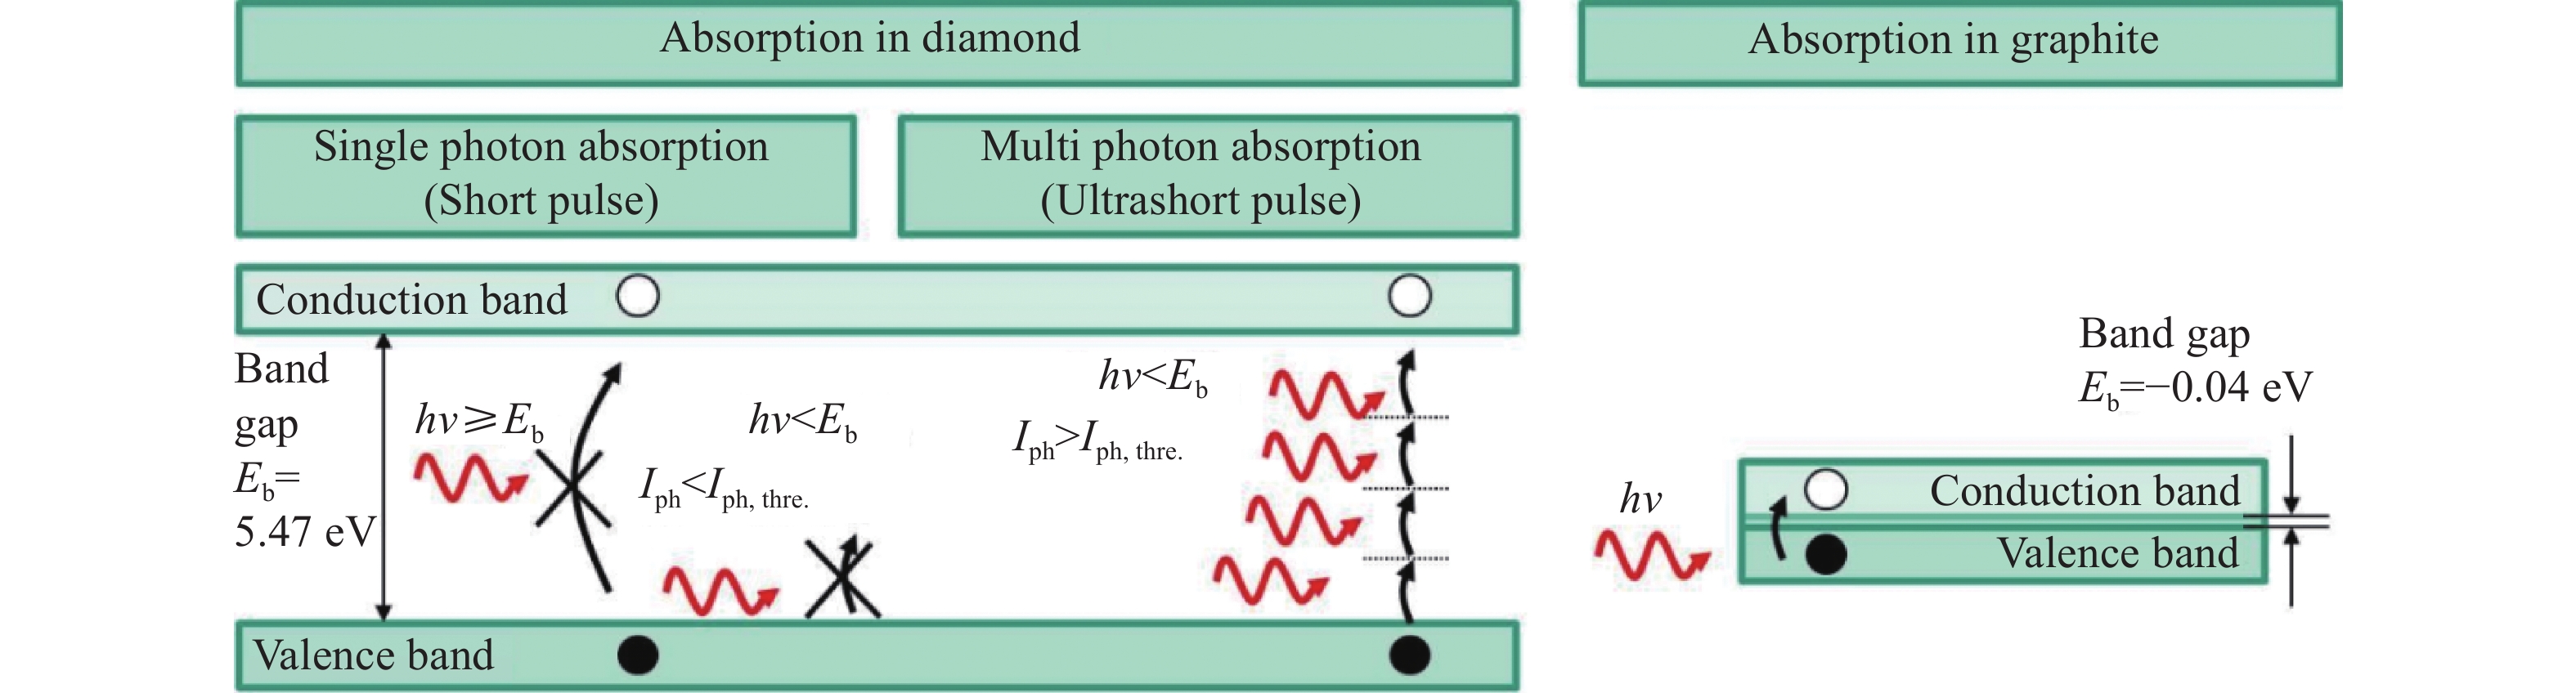 Absorption behavior of diamond and graphite [21]